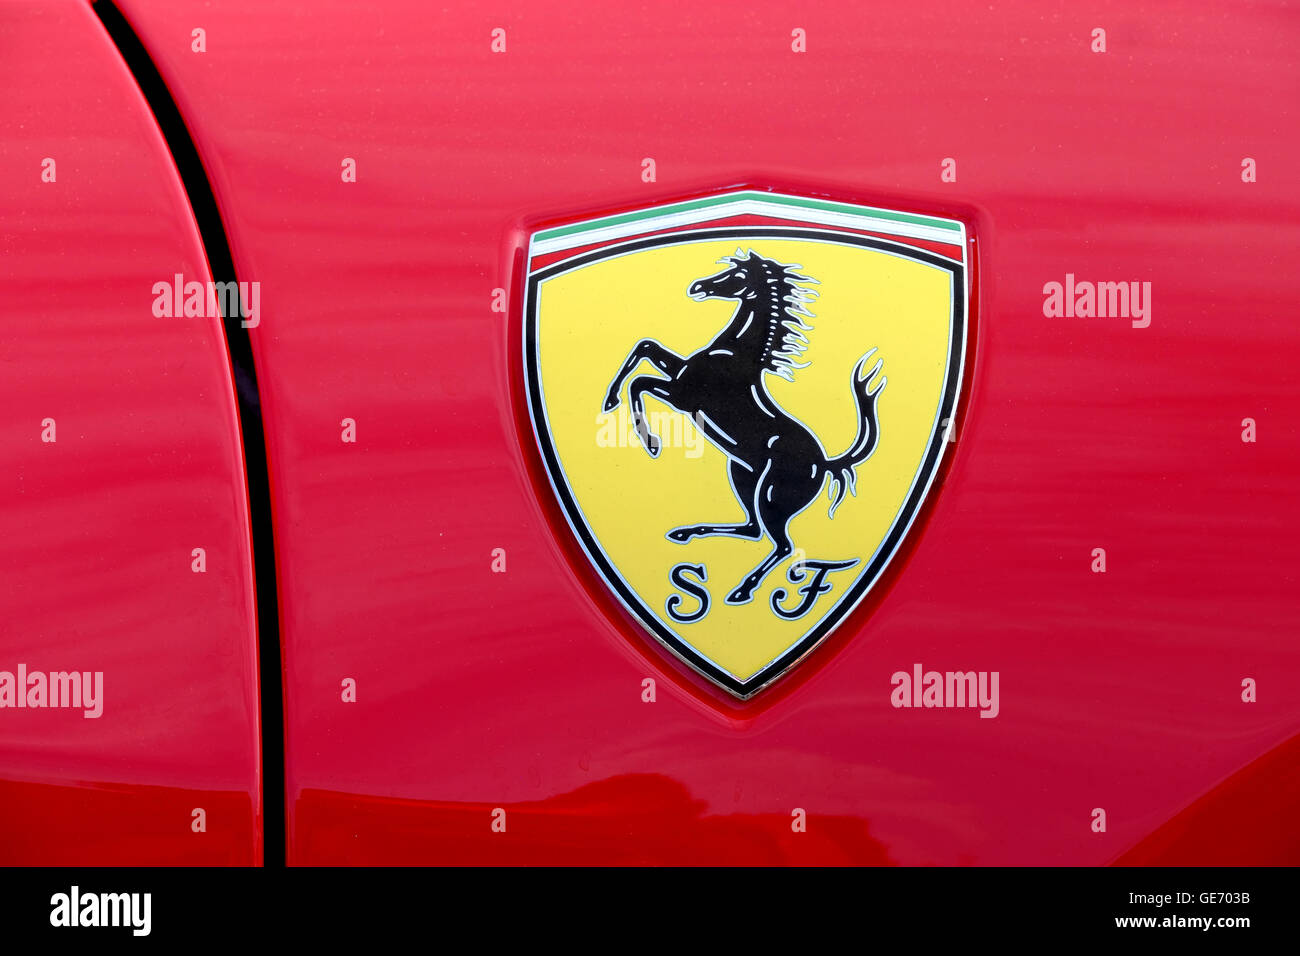 Un primer plano de una insignia de Ferrari en un coche Ferrari rojo. La imagen muestra la cresta de caballo prancing familiar del fabricante de automóviles italiano Foto de stock